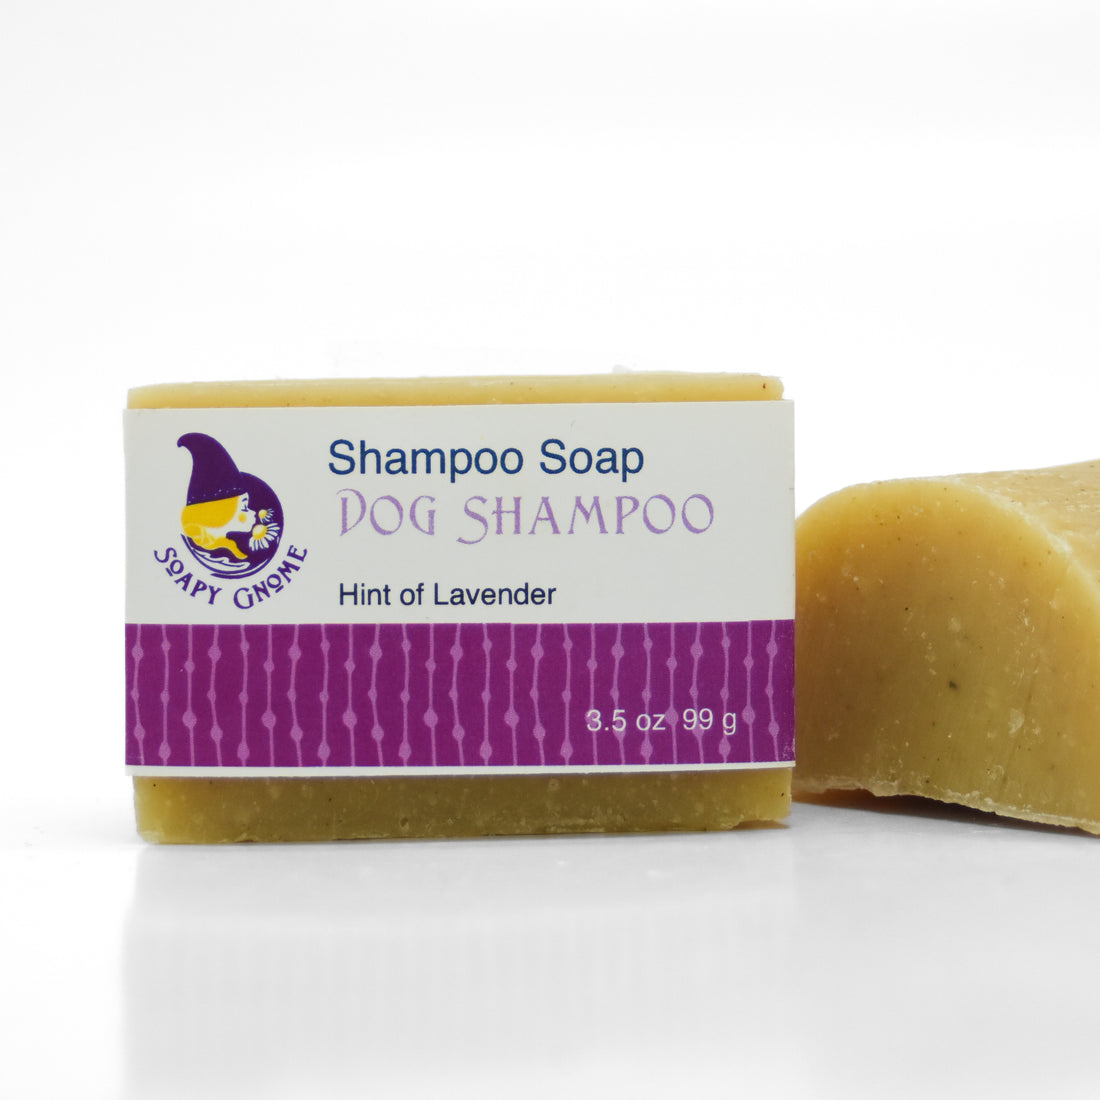 Dog Shampoo Soap